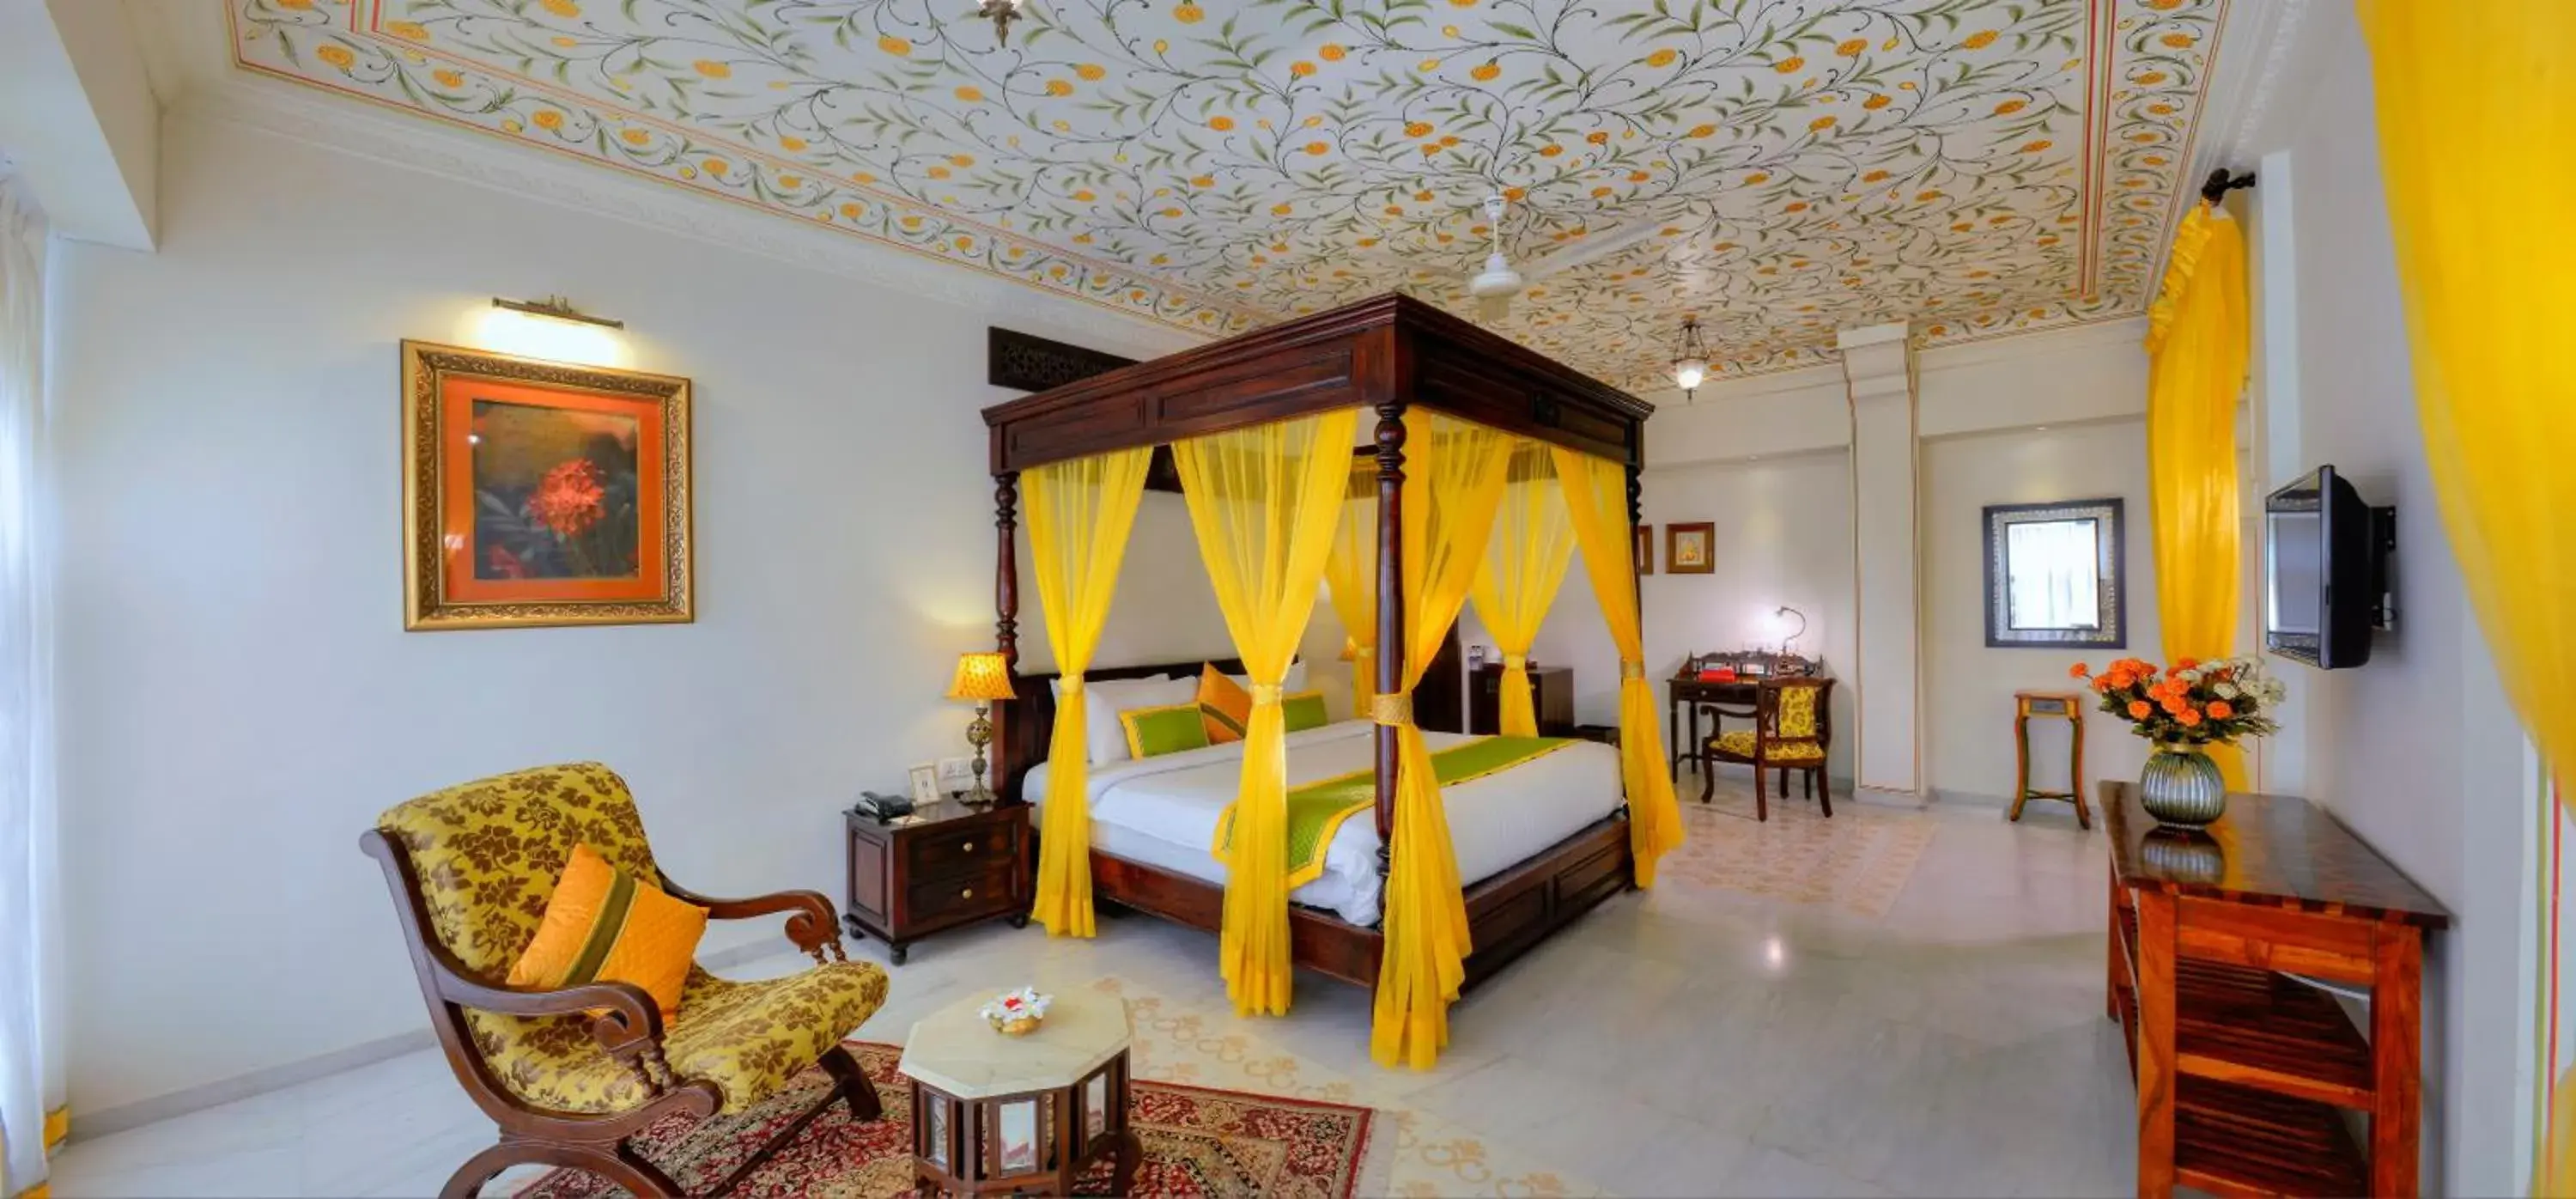 Living room in Anuraga Palace